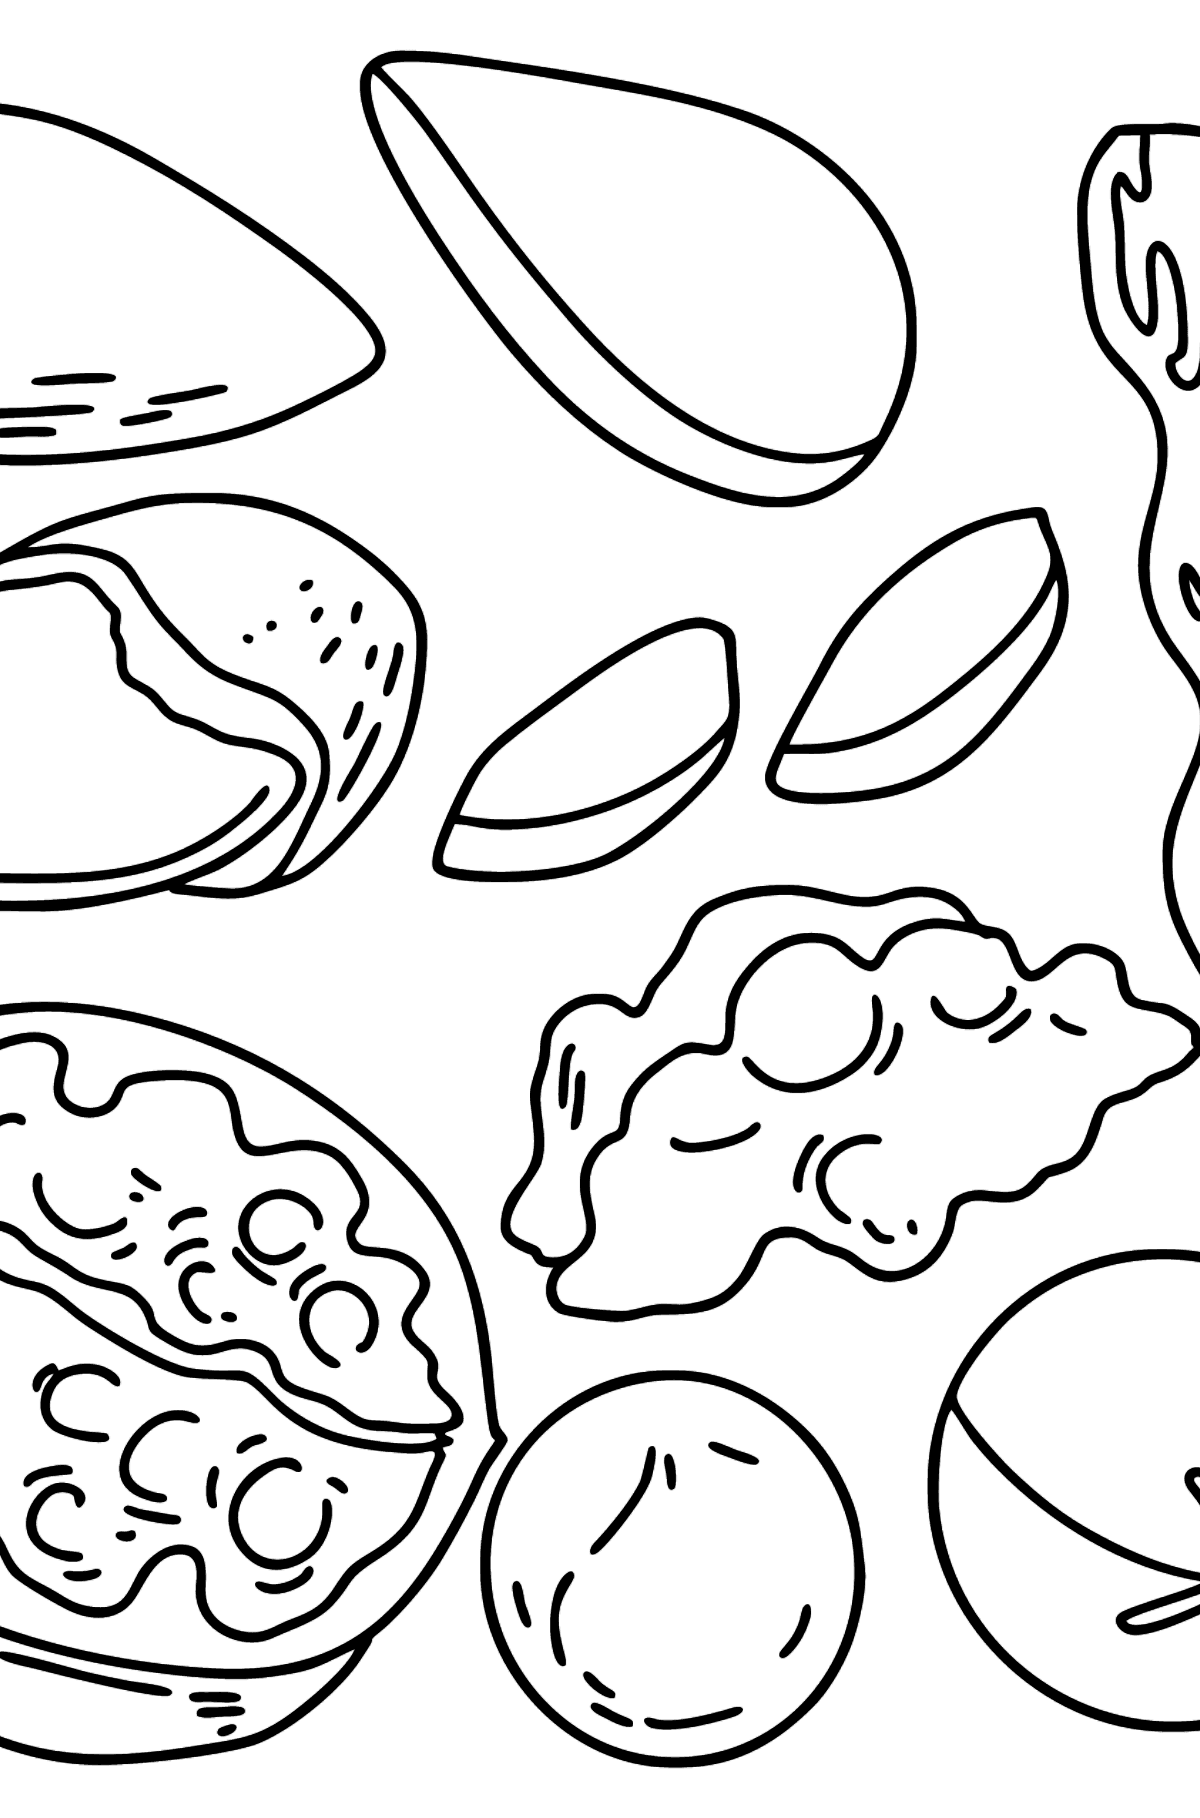 Tegning til fargelegging nøtter: valnøtter, macadamia, mandler og peanøtter - Tegninger til fargelegging for barn